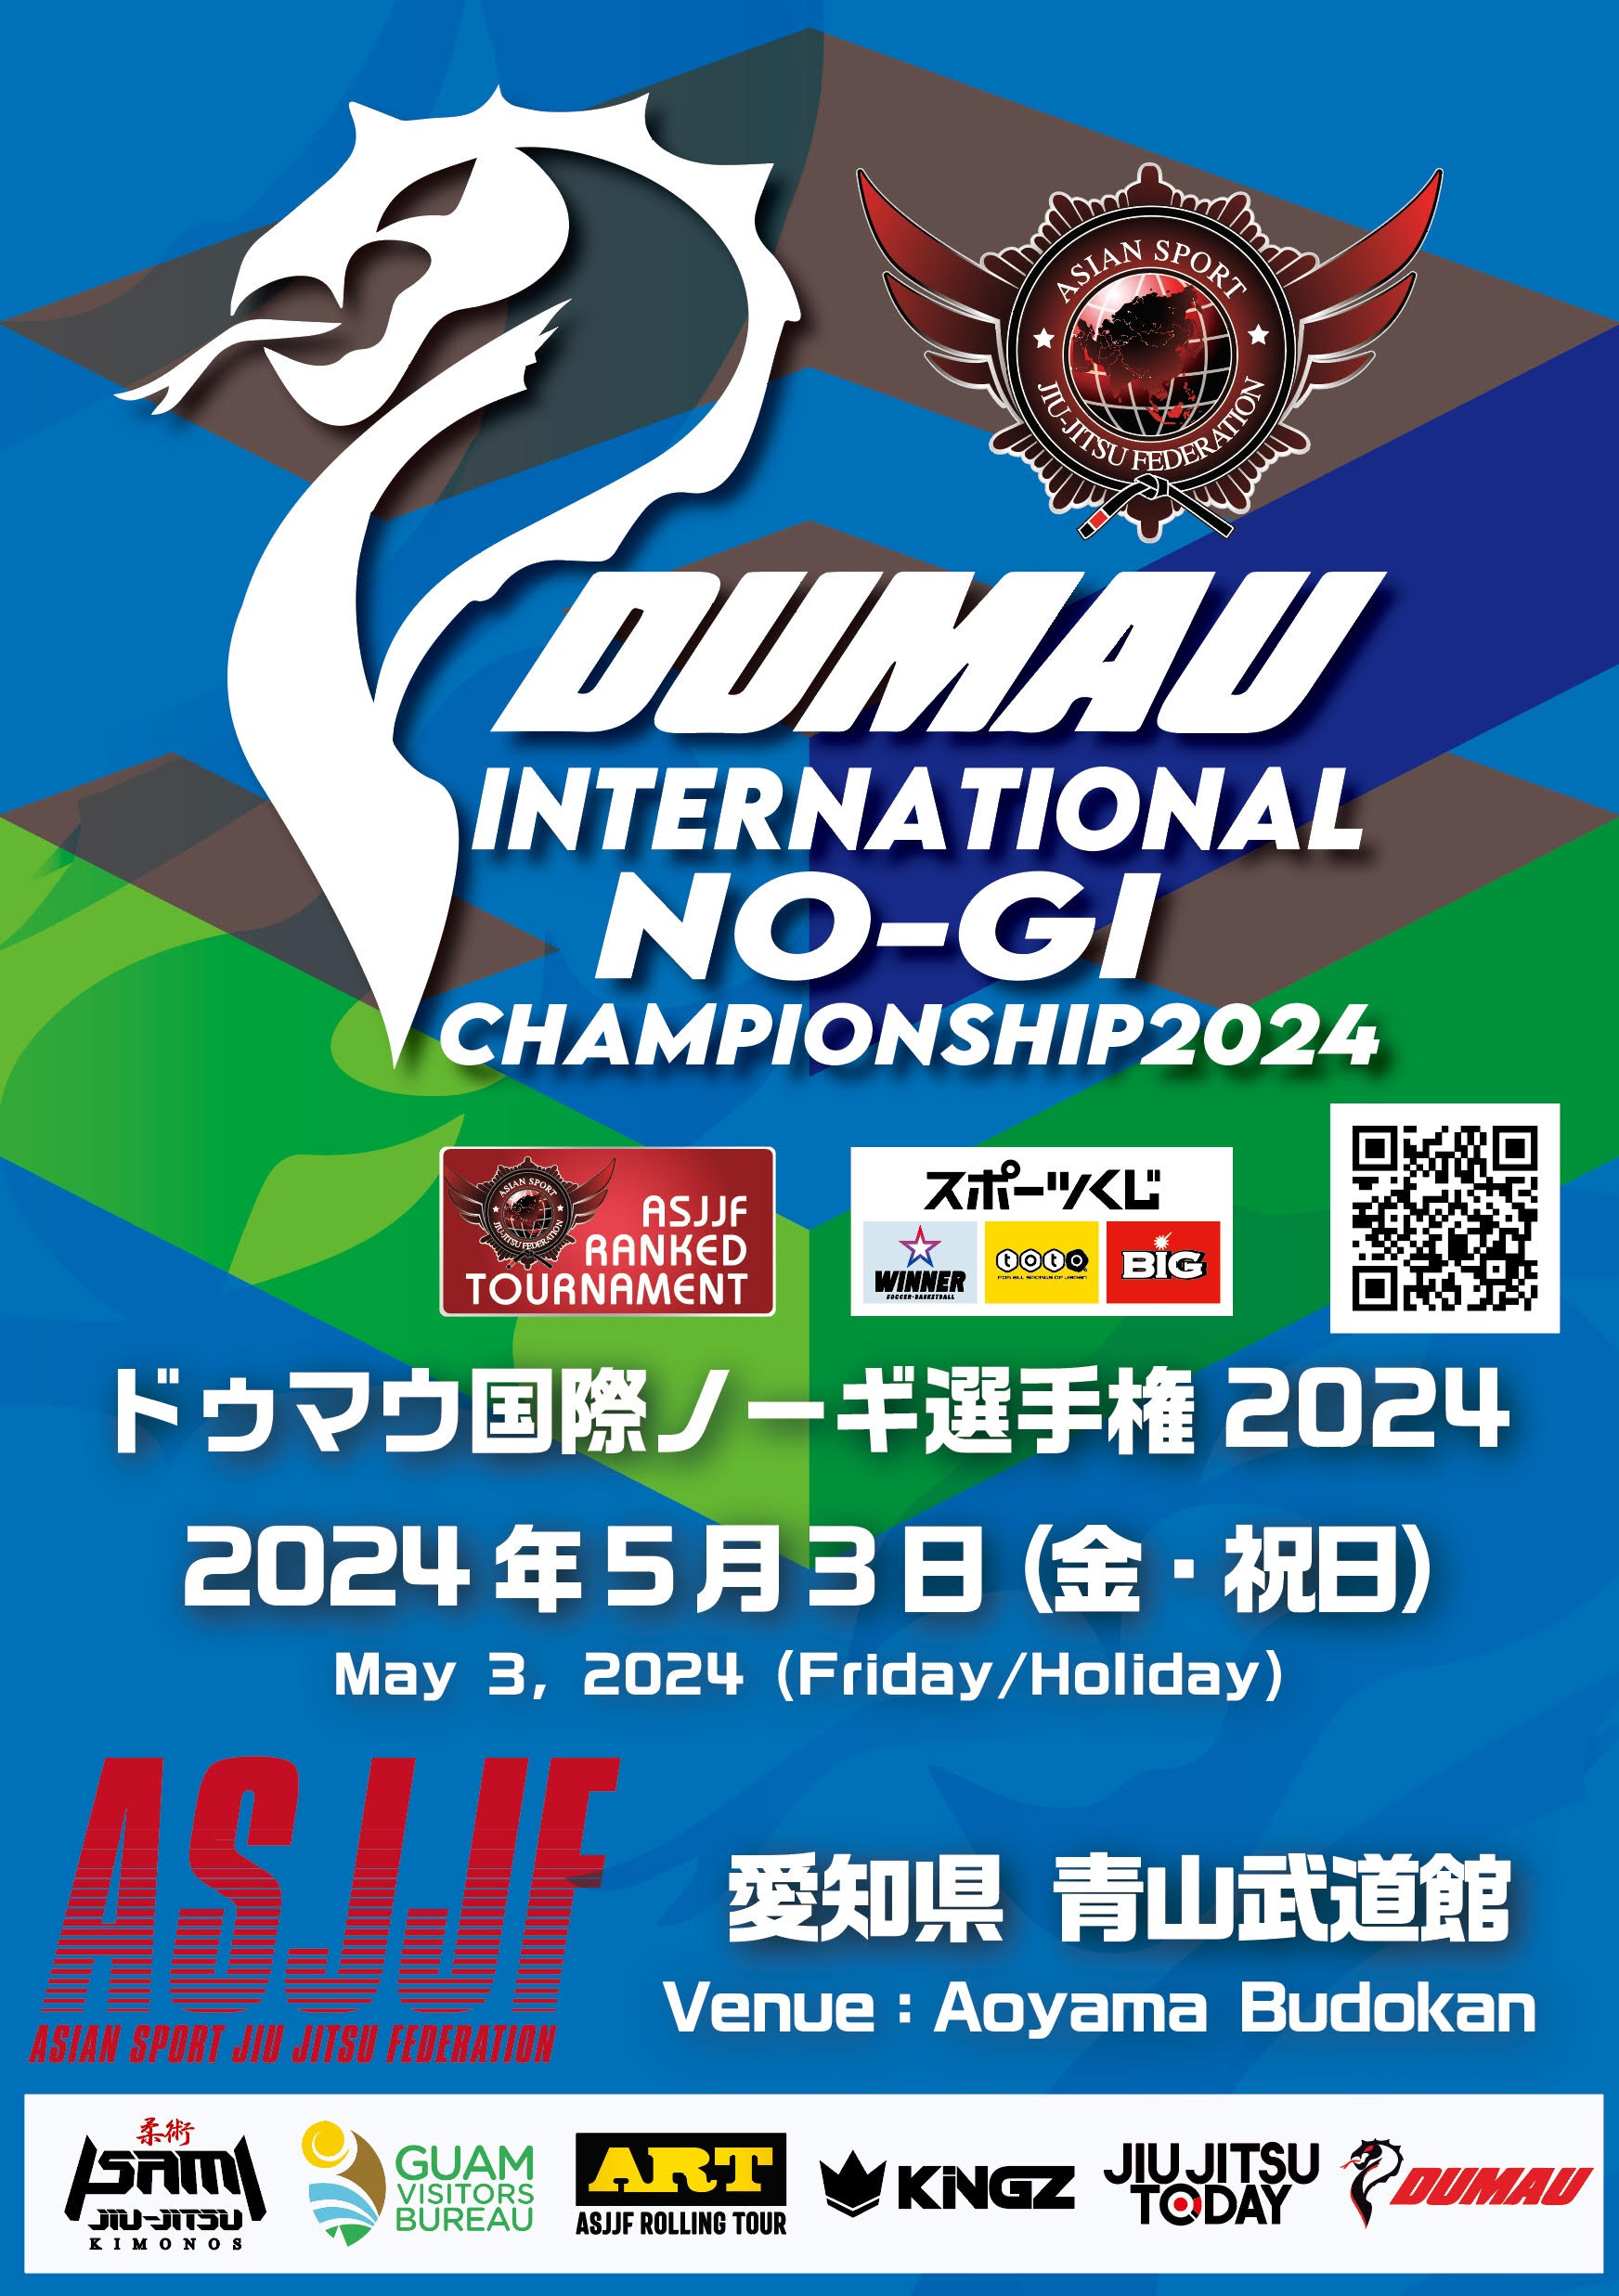 dumau international NO-GI championship 2024. (NO-GI Event)